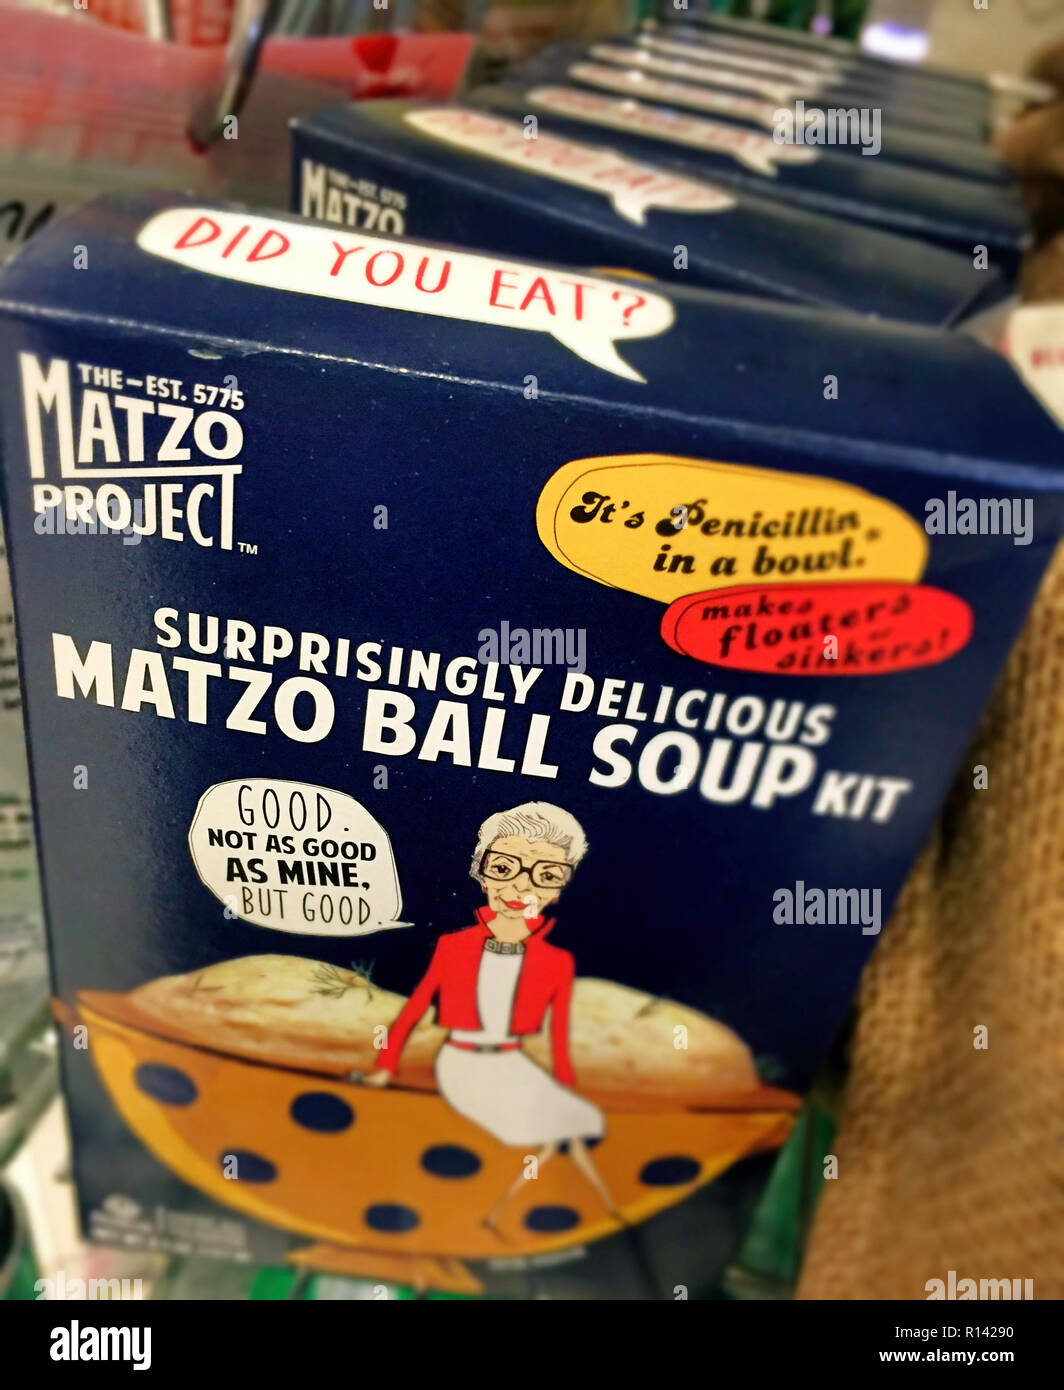 Grocery store display of Matzo Ball Soup Kit, NYC, USA Stock Photo